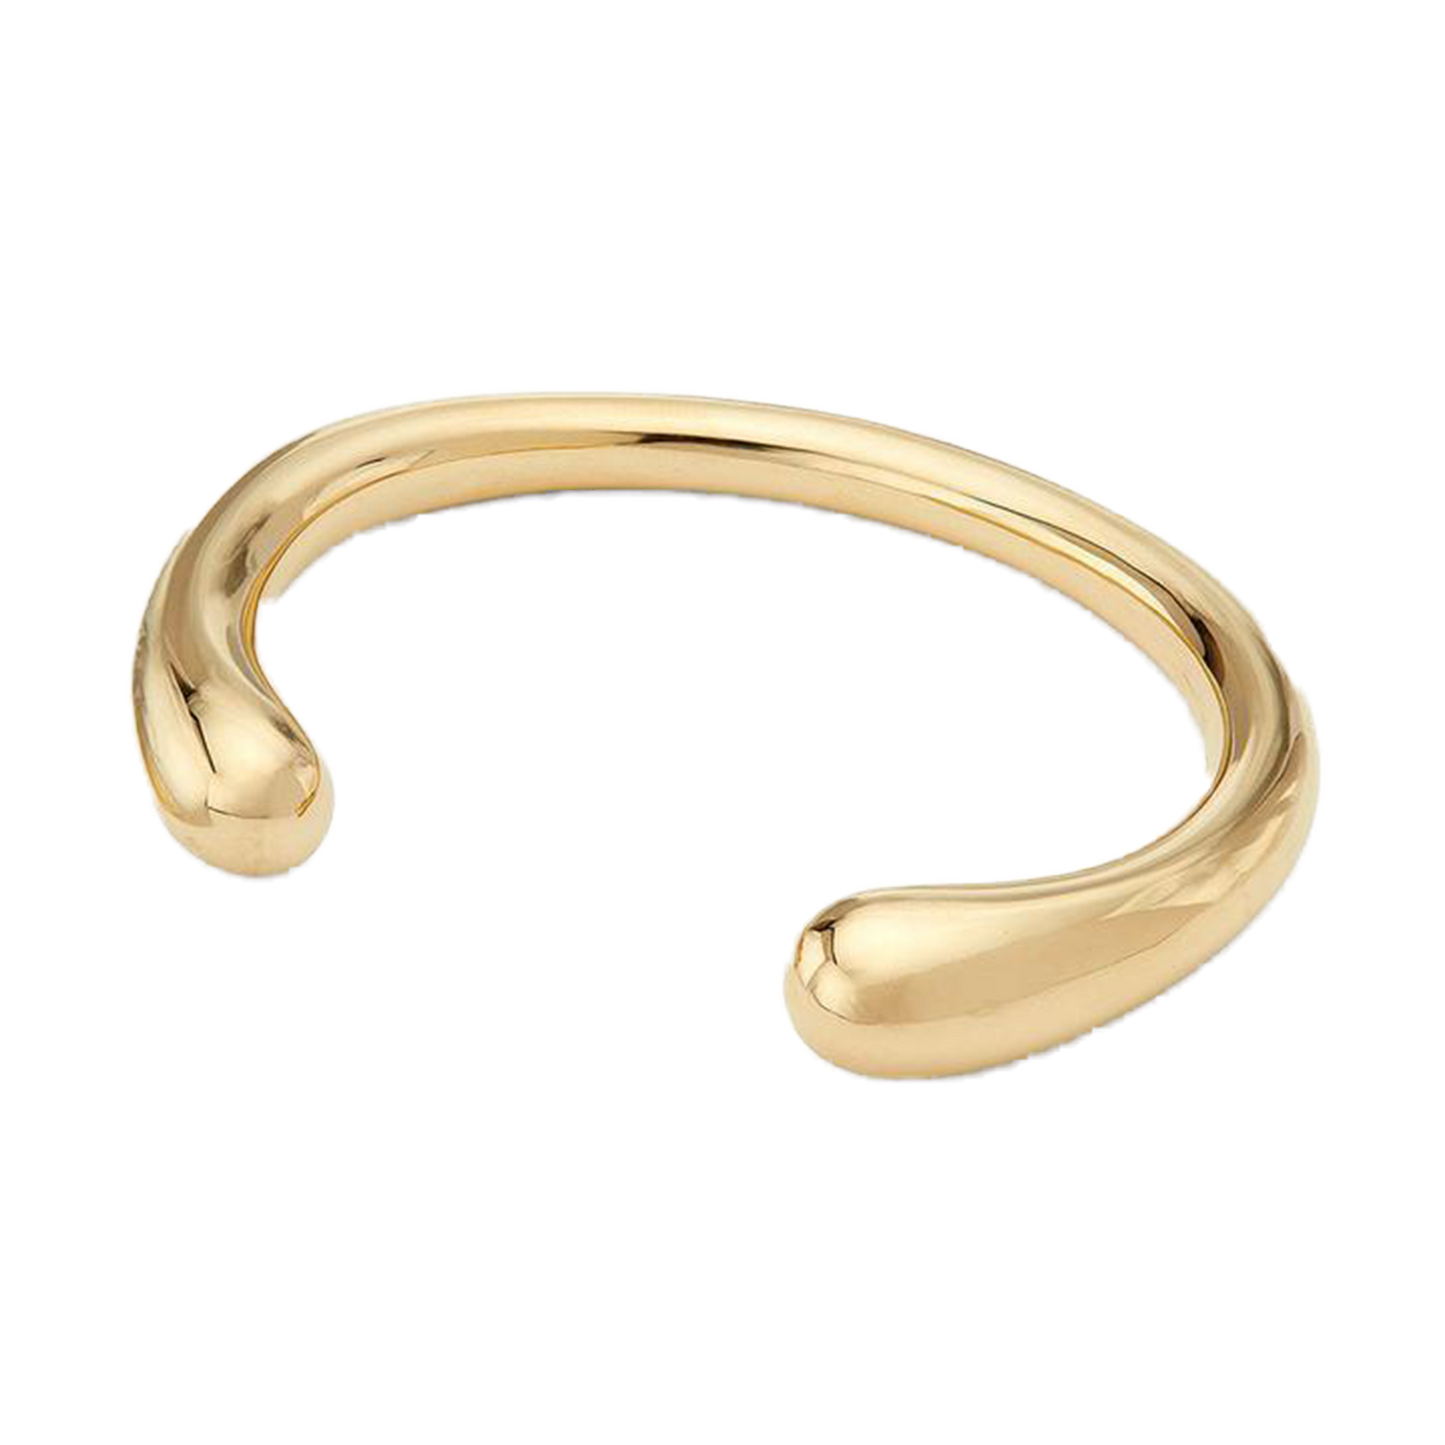 Dash Cuff Bracelet - Gold Plated